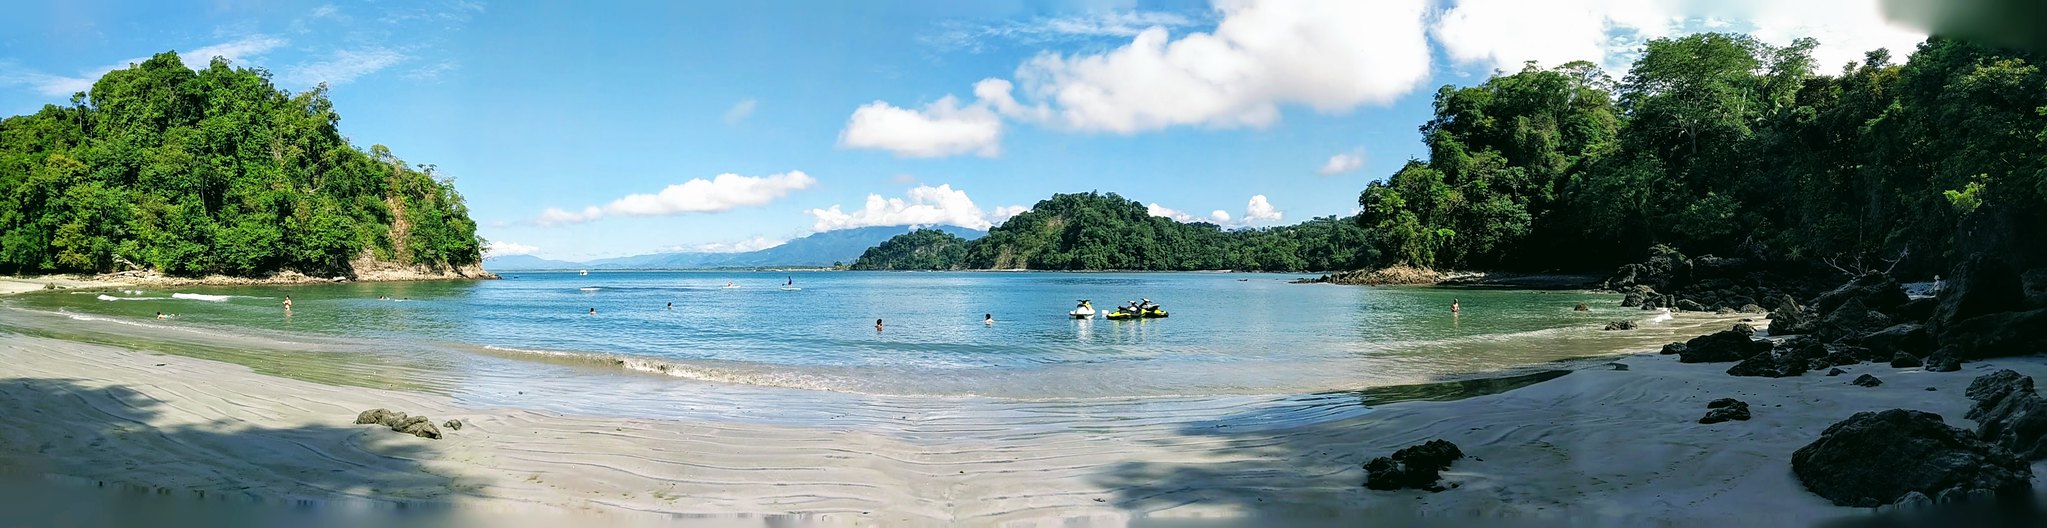 Playa Biesanz, Costa Rica